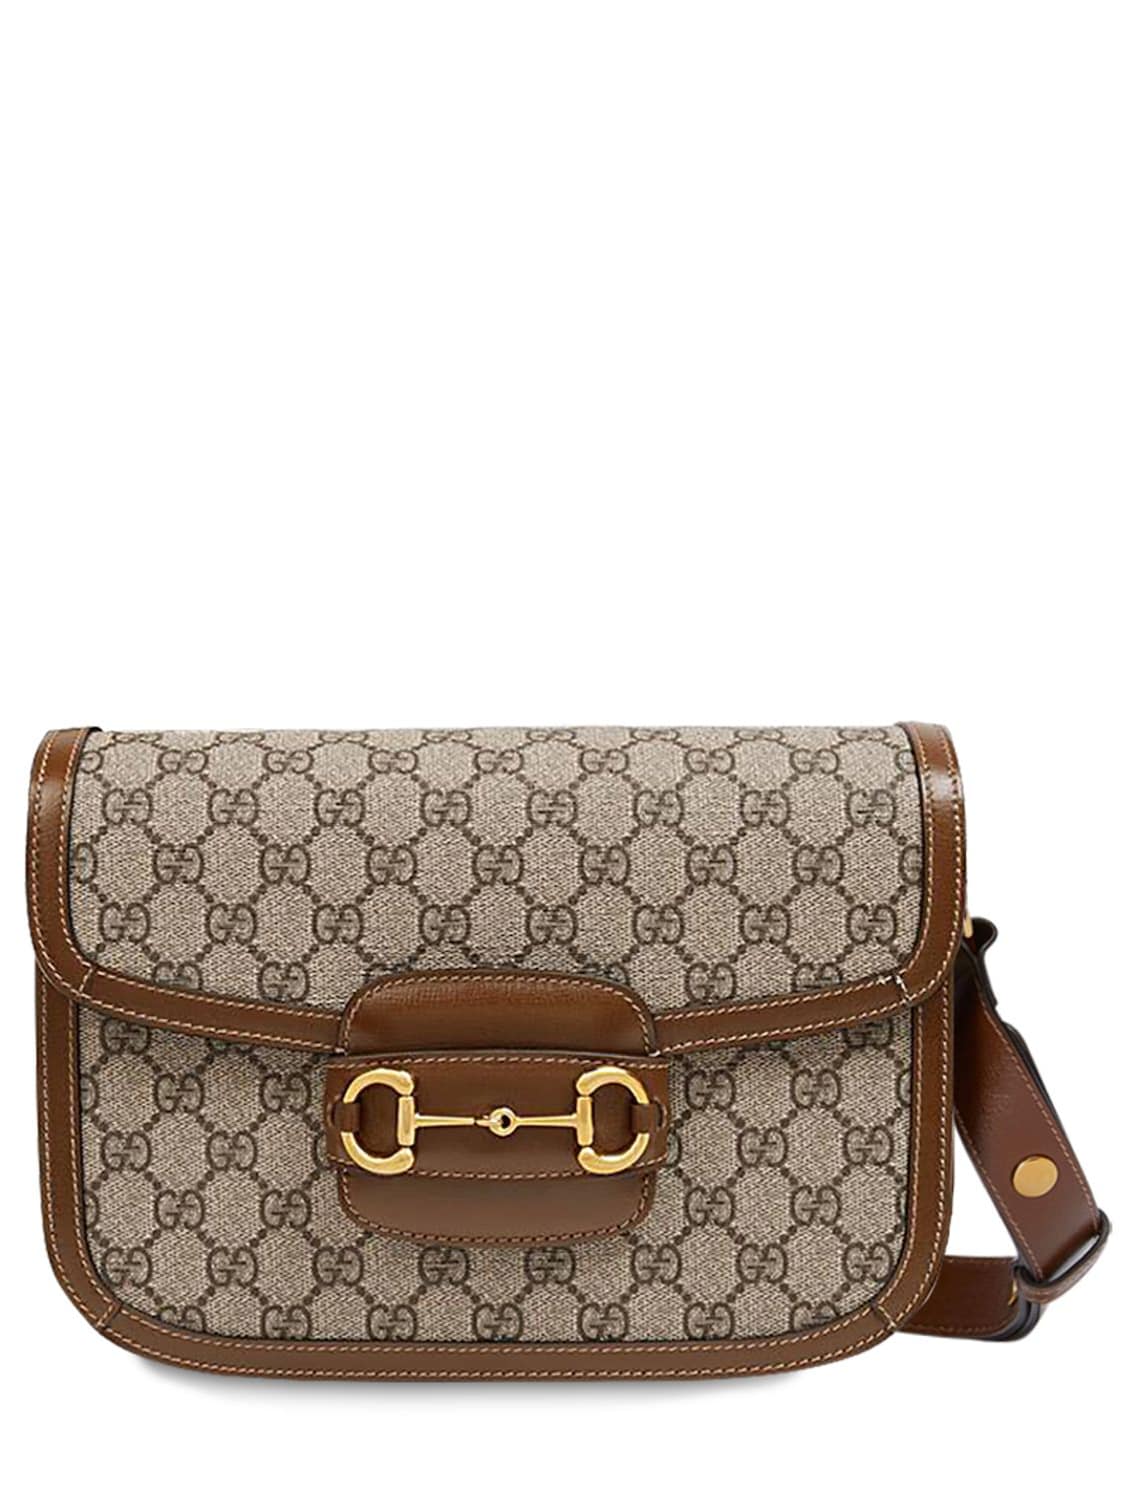 Gucci 1955 Horsebit Gg Supreme & Leather Bag In Ebony,brown